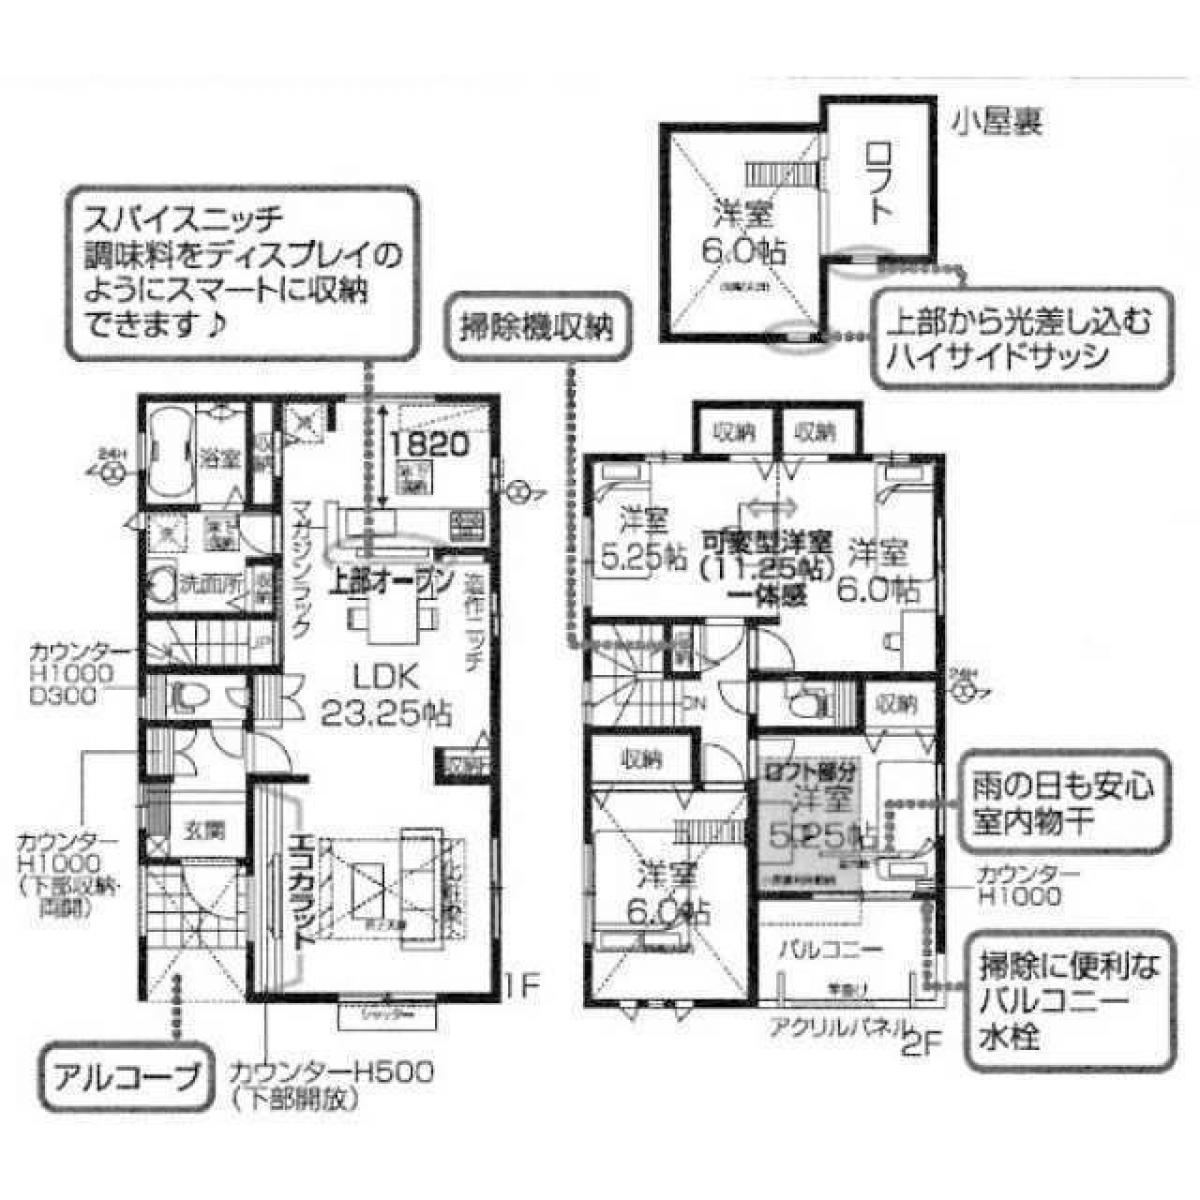 Picture of Home For Sale in Yashio Shi, Saitama, Japan